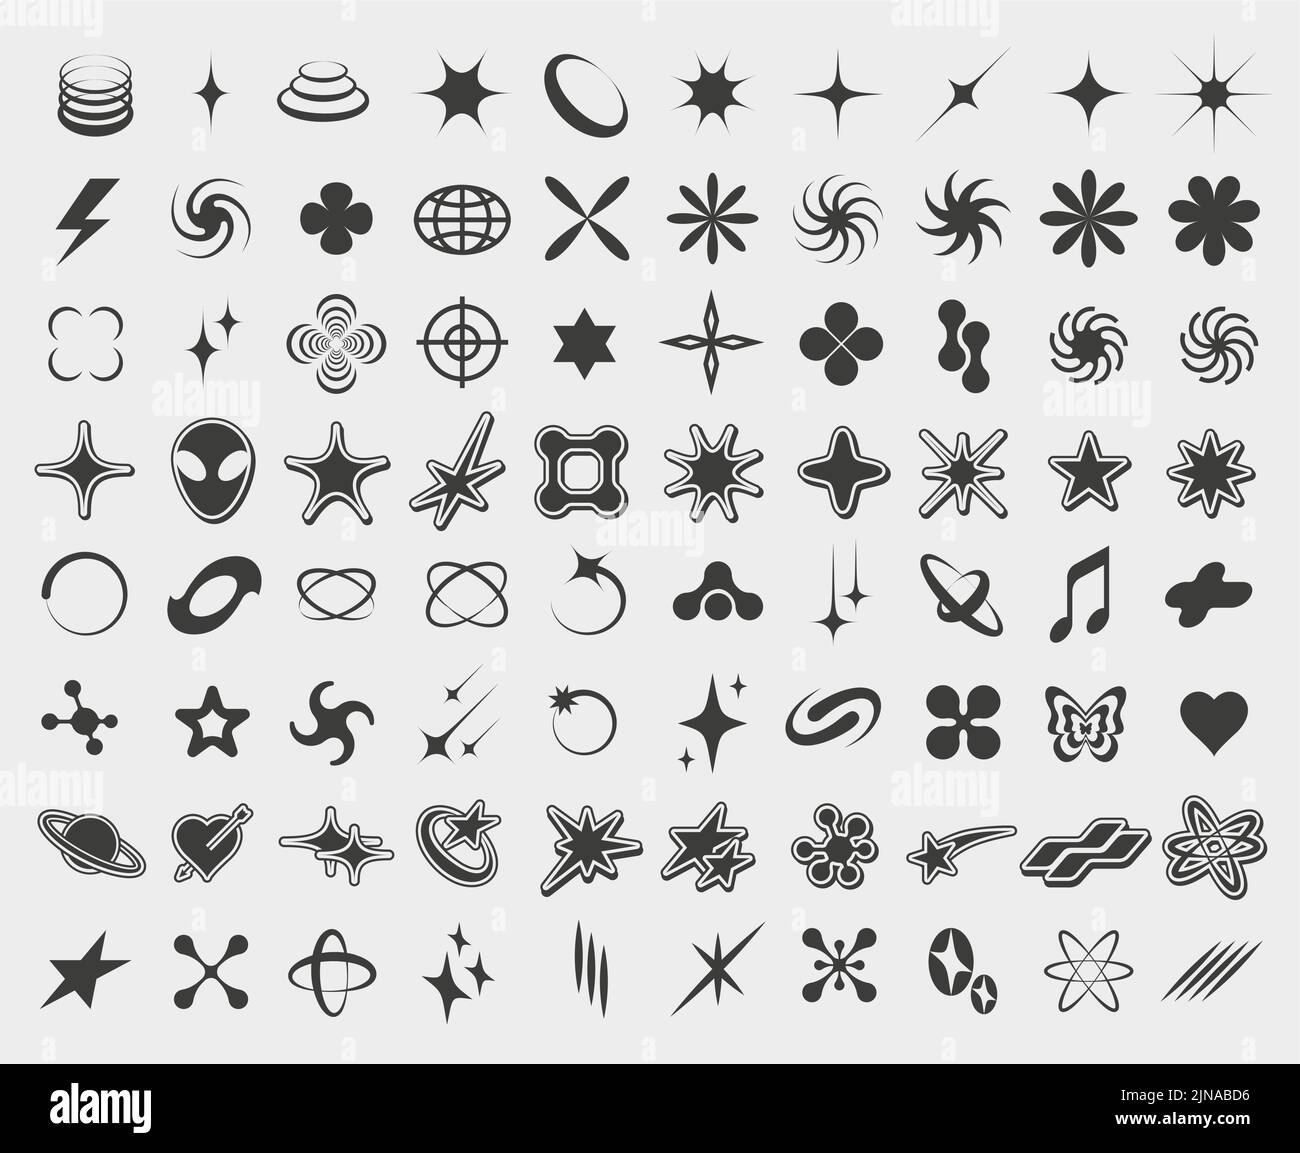 Y2K symbols. Retro star icons, trendy acid rave and graphic elements ...